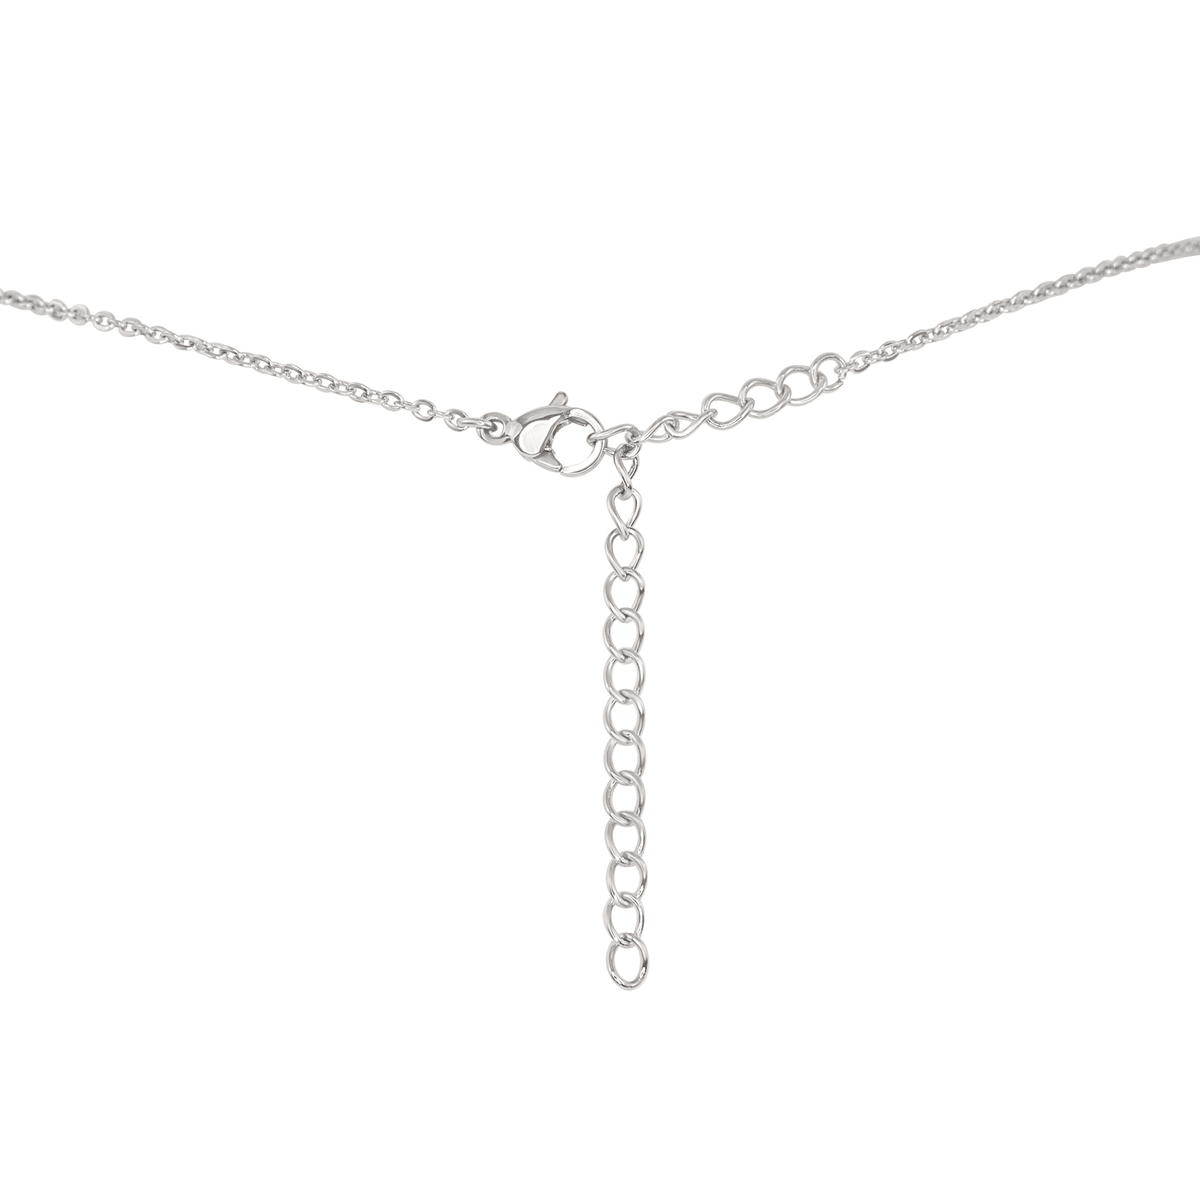 Tiny Raw Crystal Quartz Pendant Necklace - Tiny Raw Crystal Quartz Pendant Necklace - 14k Gold Fill / Cable - Luna Tide Handmade Crystal Jewellery